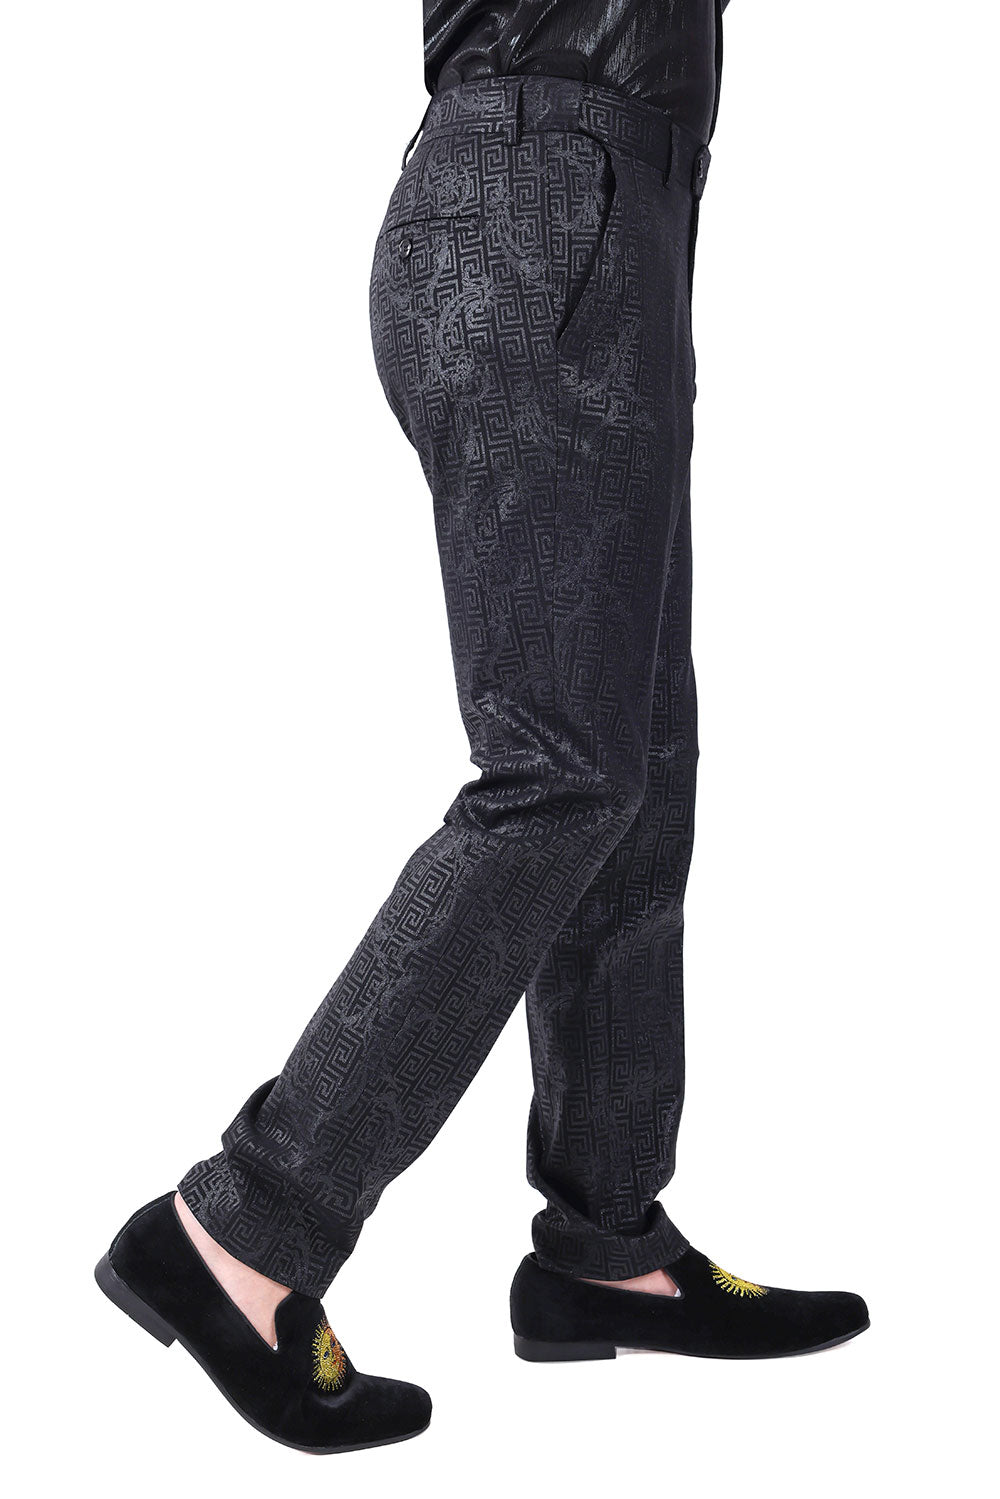 Barabas Men's Luxury Greek Key Pattern Black Chino Dress Pants CP167 Black